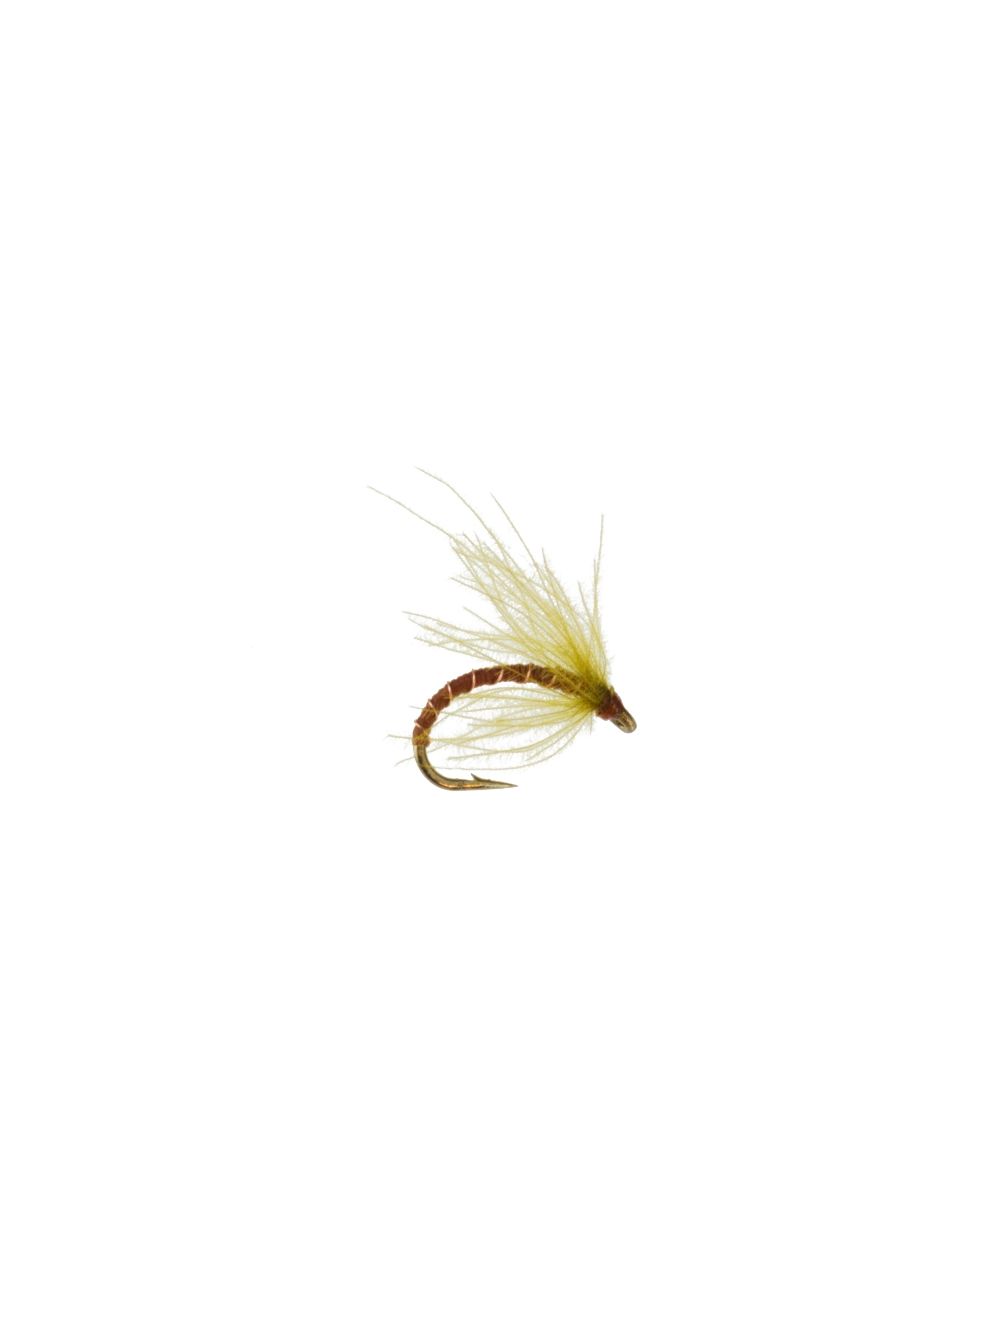 https://eadn-wc02-1020161.nxedge.io/cdn/media/catalog/product/cache/32b930e20bfef0c9badd7ee253a86131/c/d/cdc-caddis-emerger-olive-fly-fishing-flies-nymphs_5.jpg